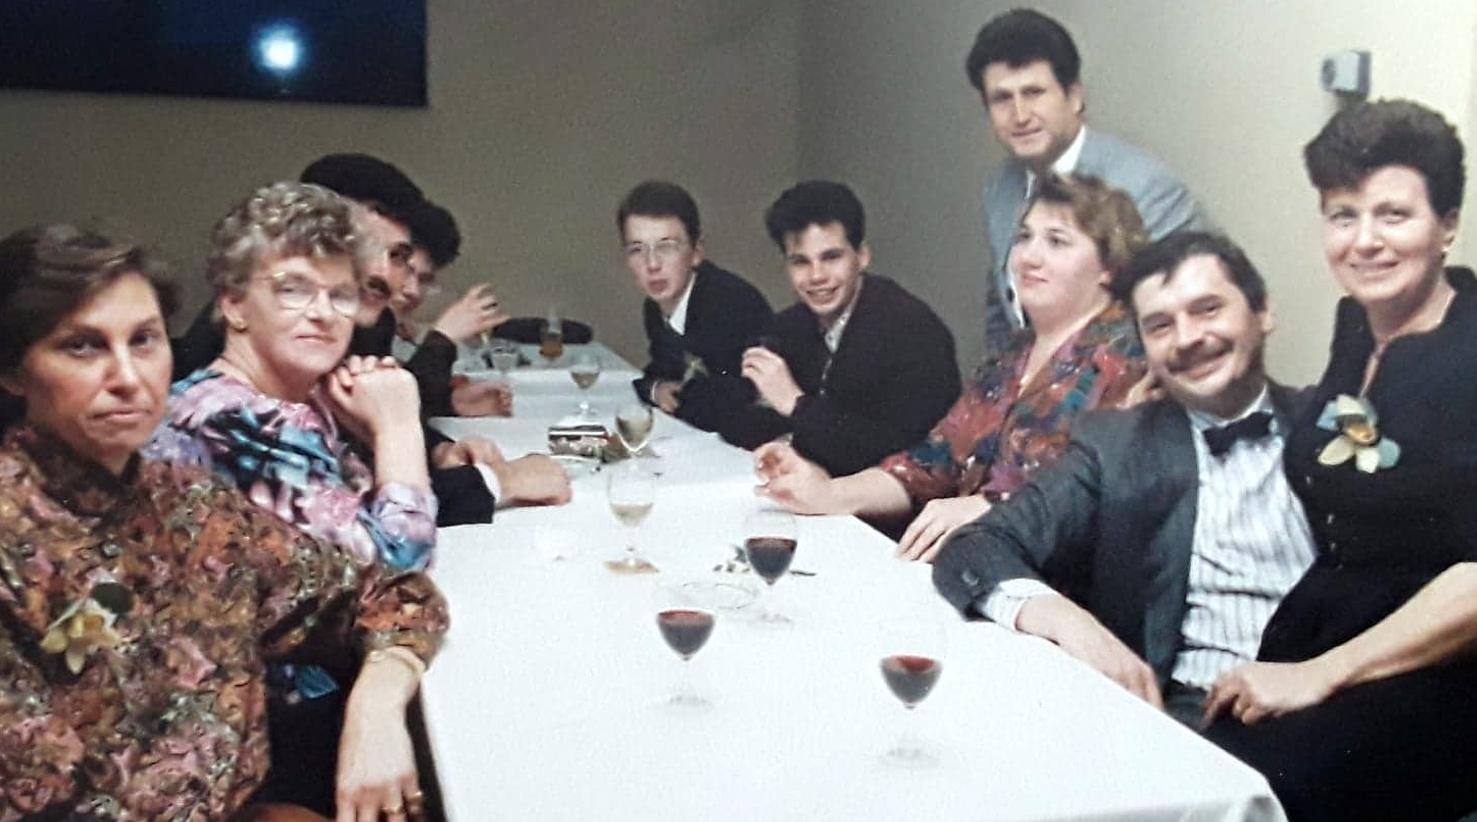 Madeleine vd keuken in 1990